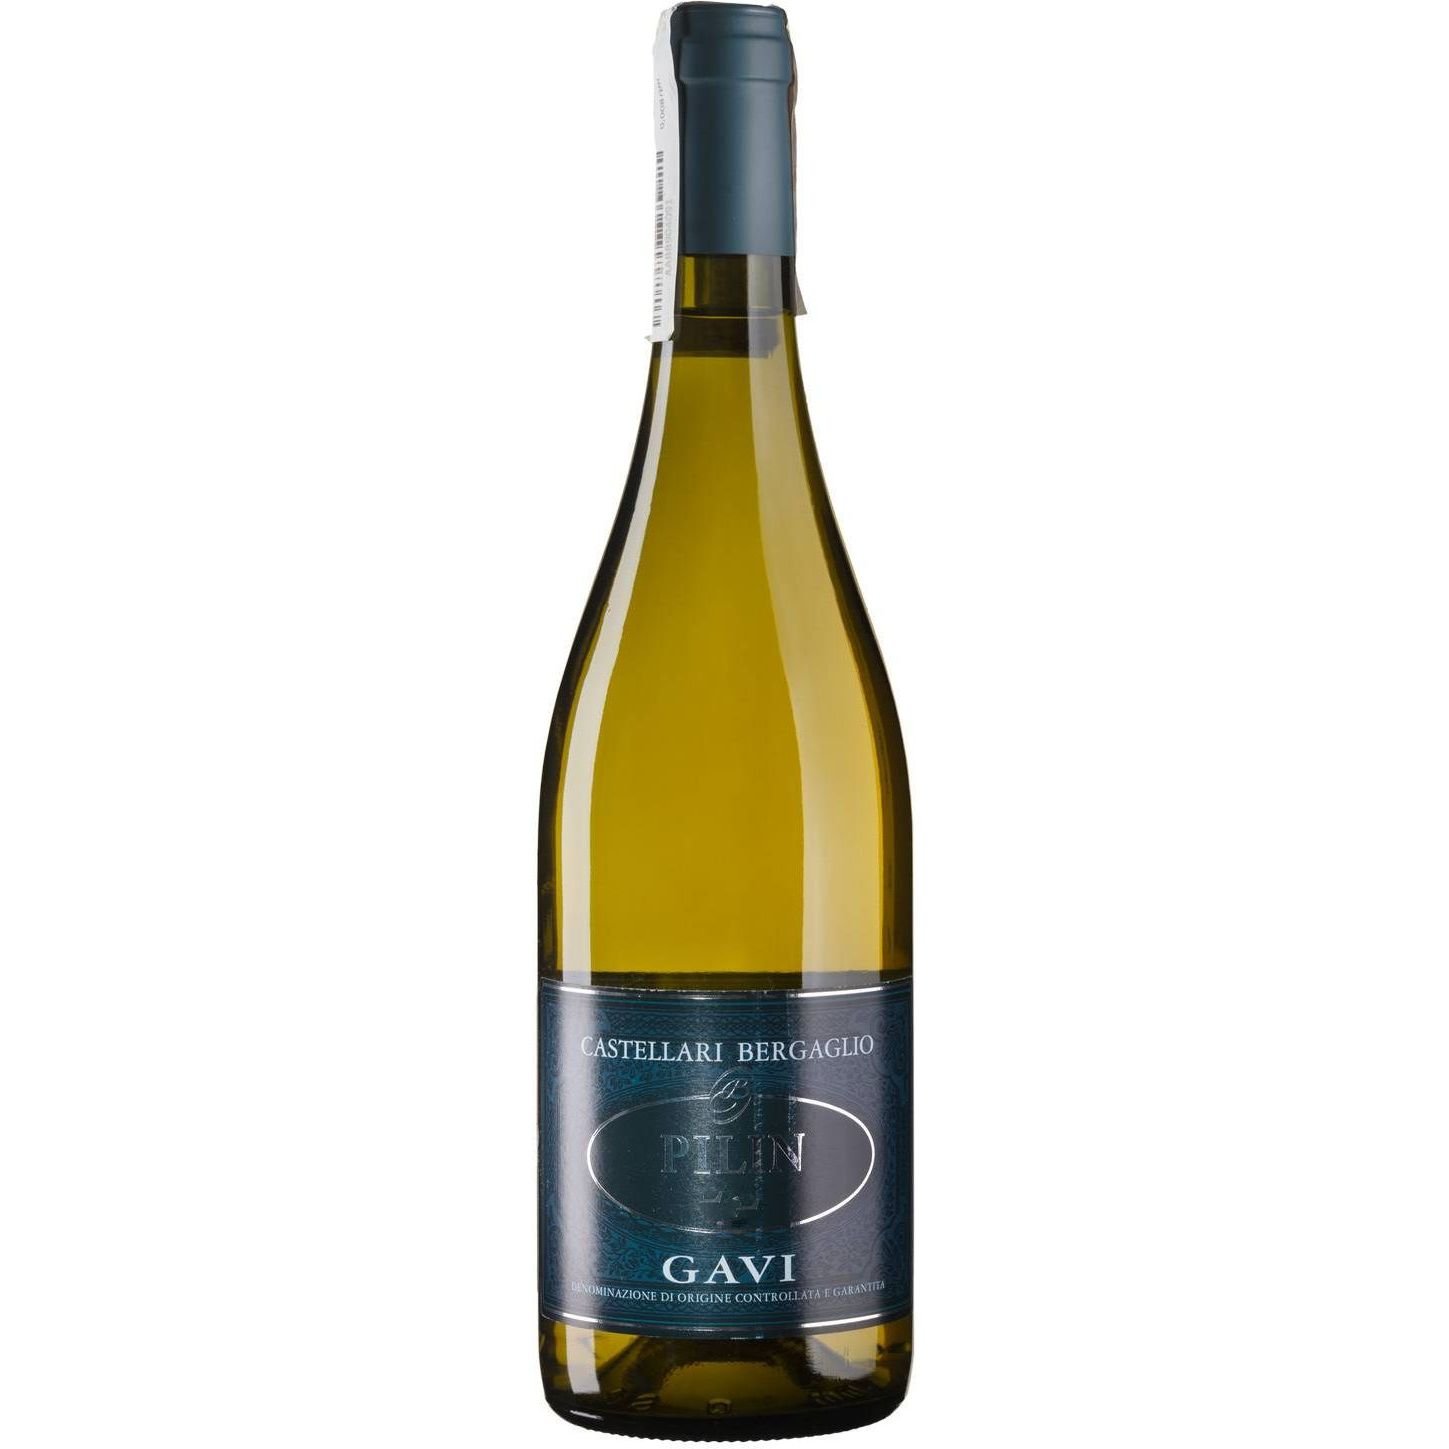 Вино Castellari Bergaglio Gavi Pilin 2015, белое, сухое, 0,75 л - фото 1